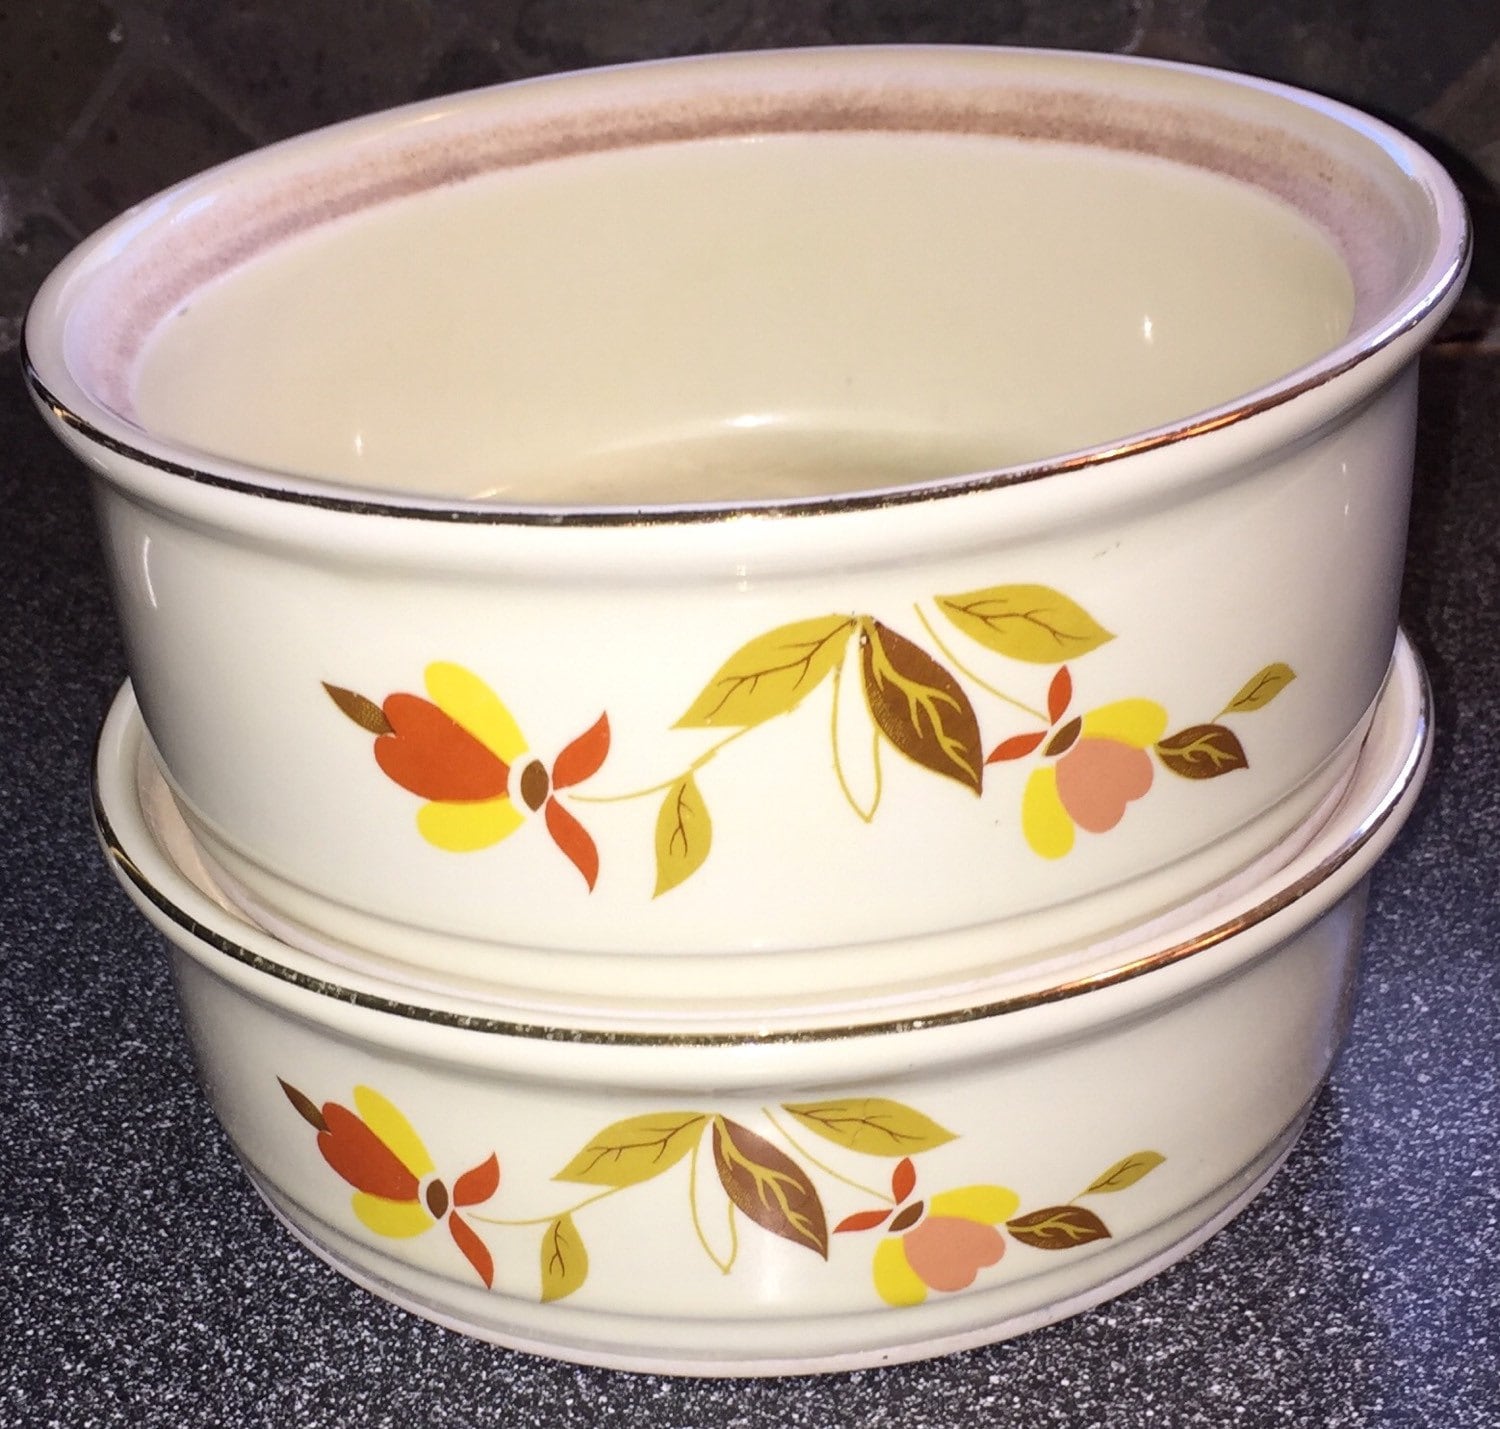 Autumn Leaf Casseroles Jewel Tea Hall's China Kitchenware